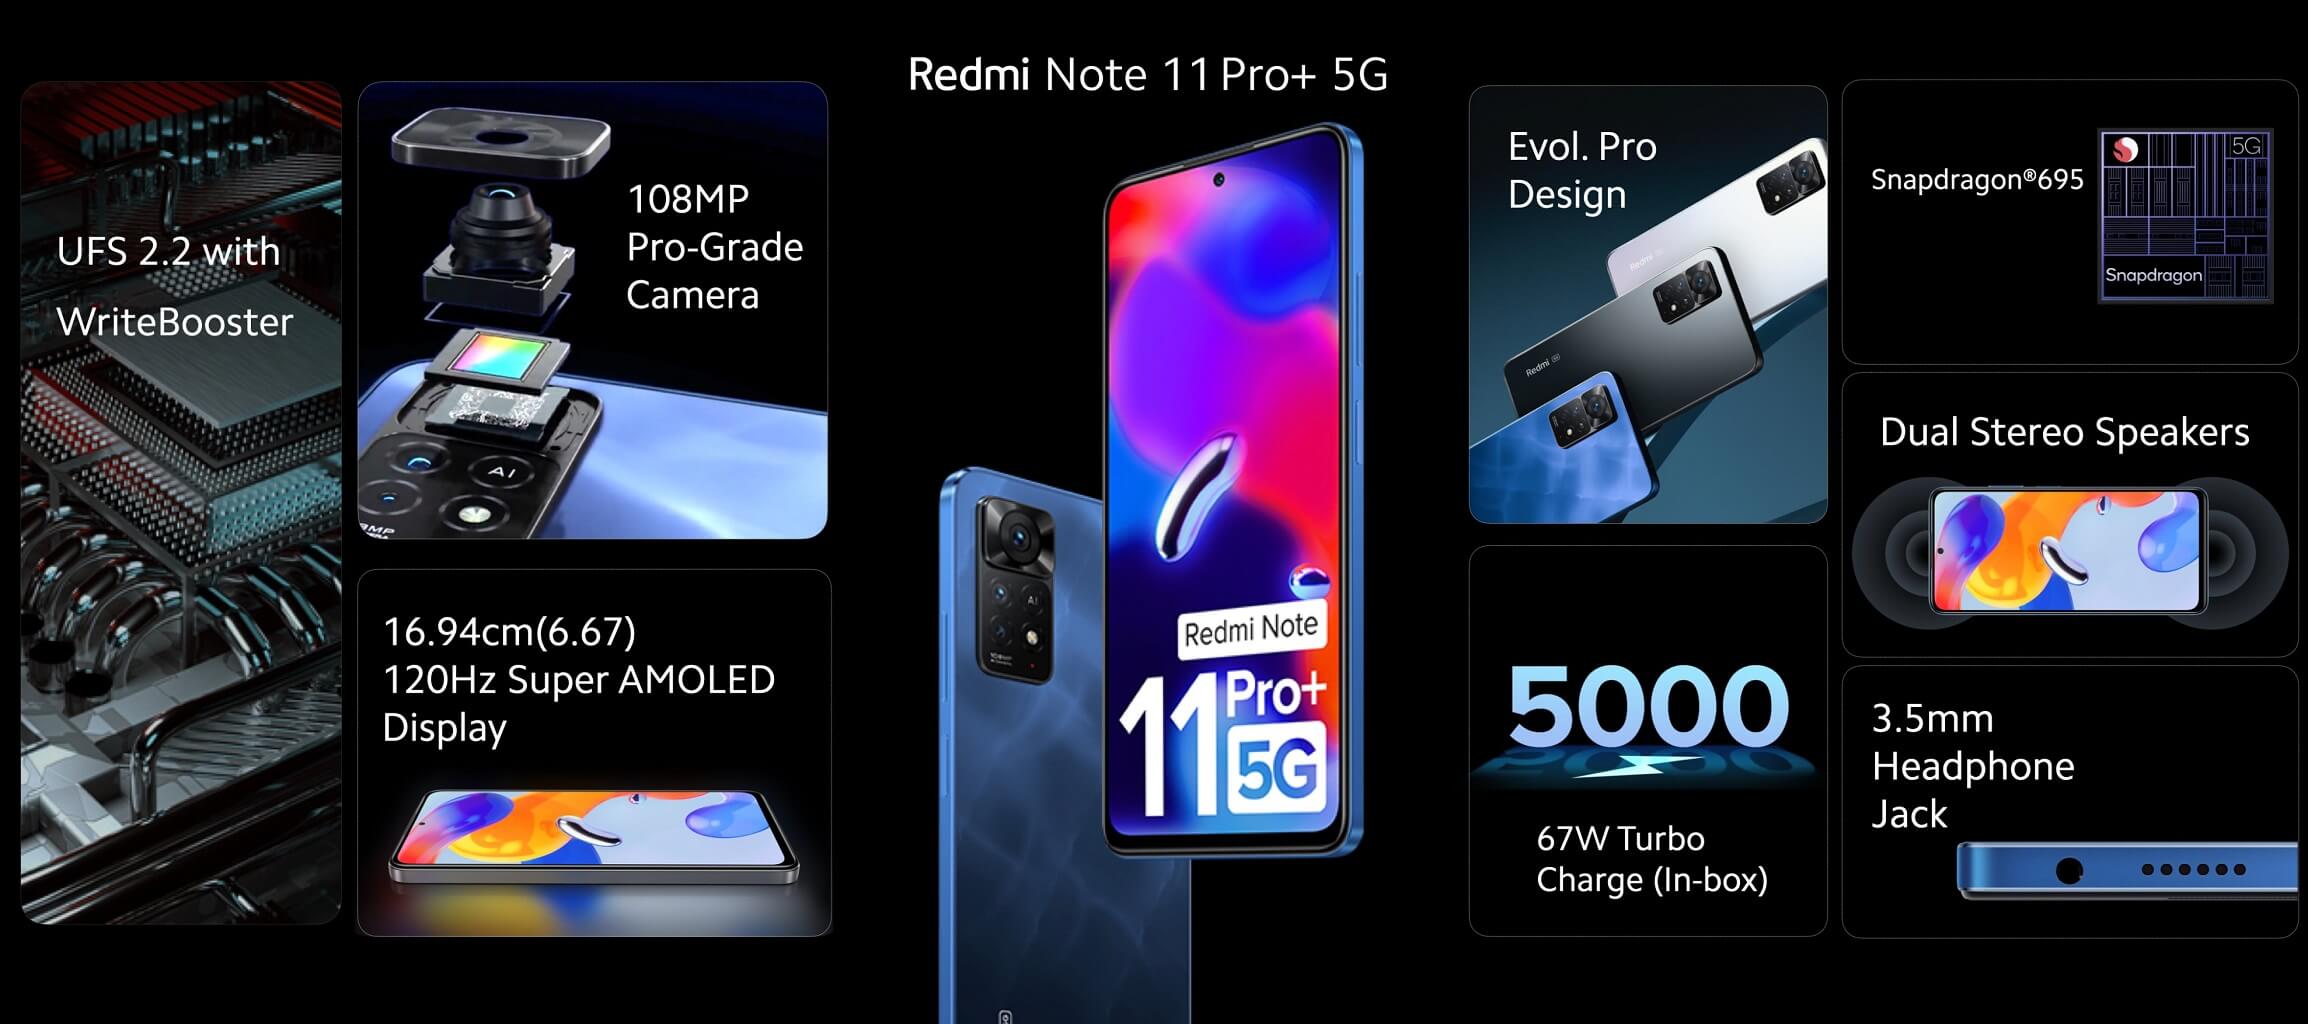 Redmi Note 11 Pro plus 5G features